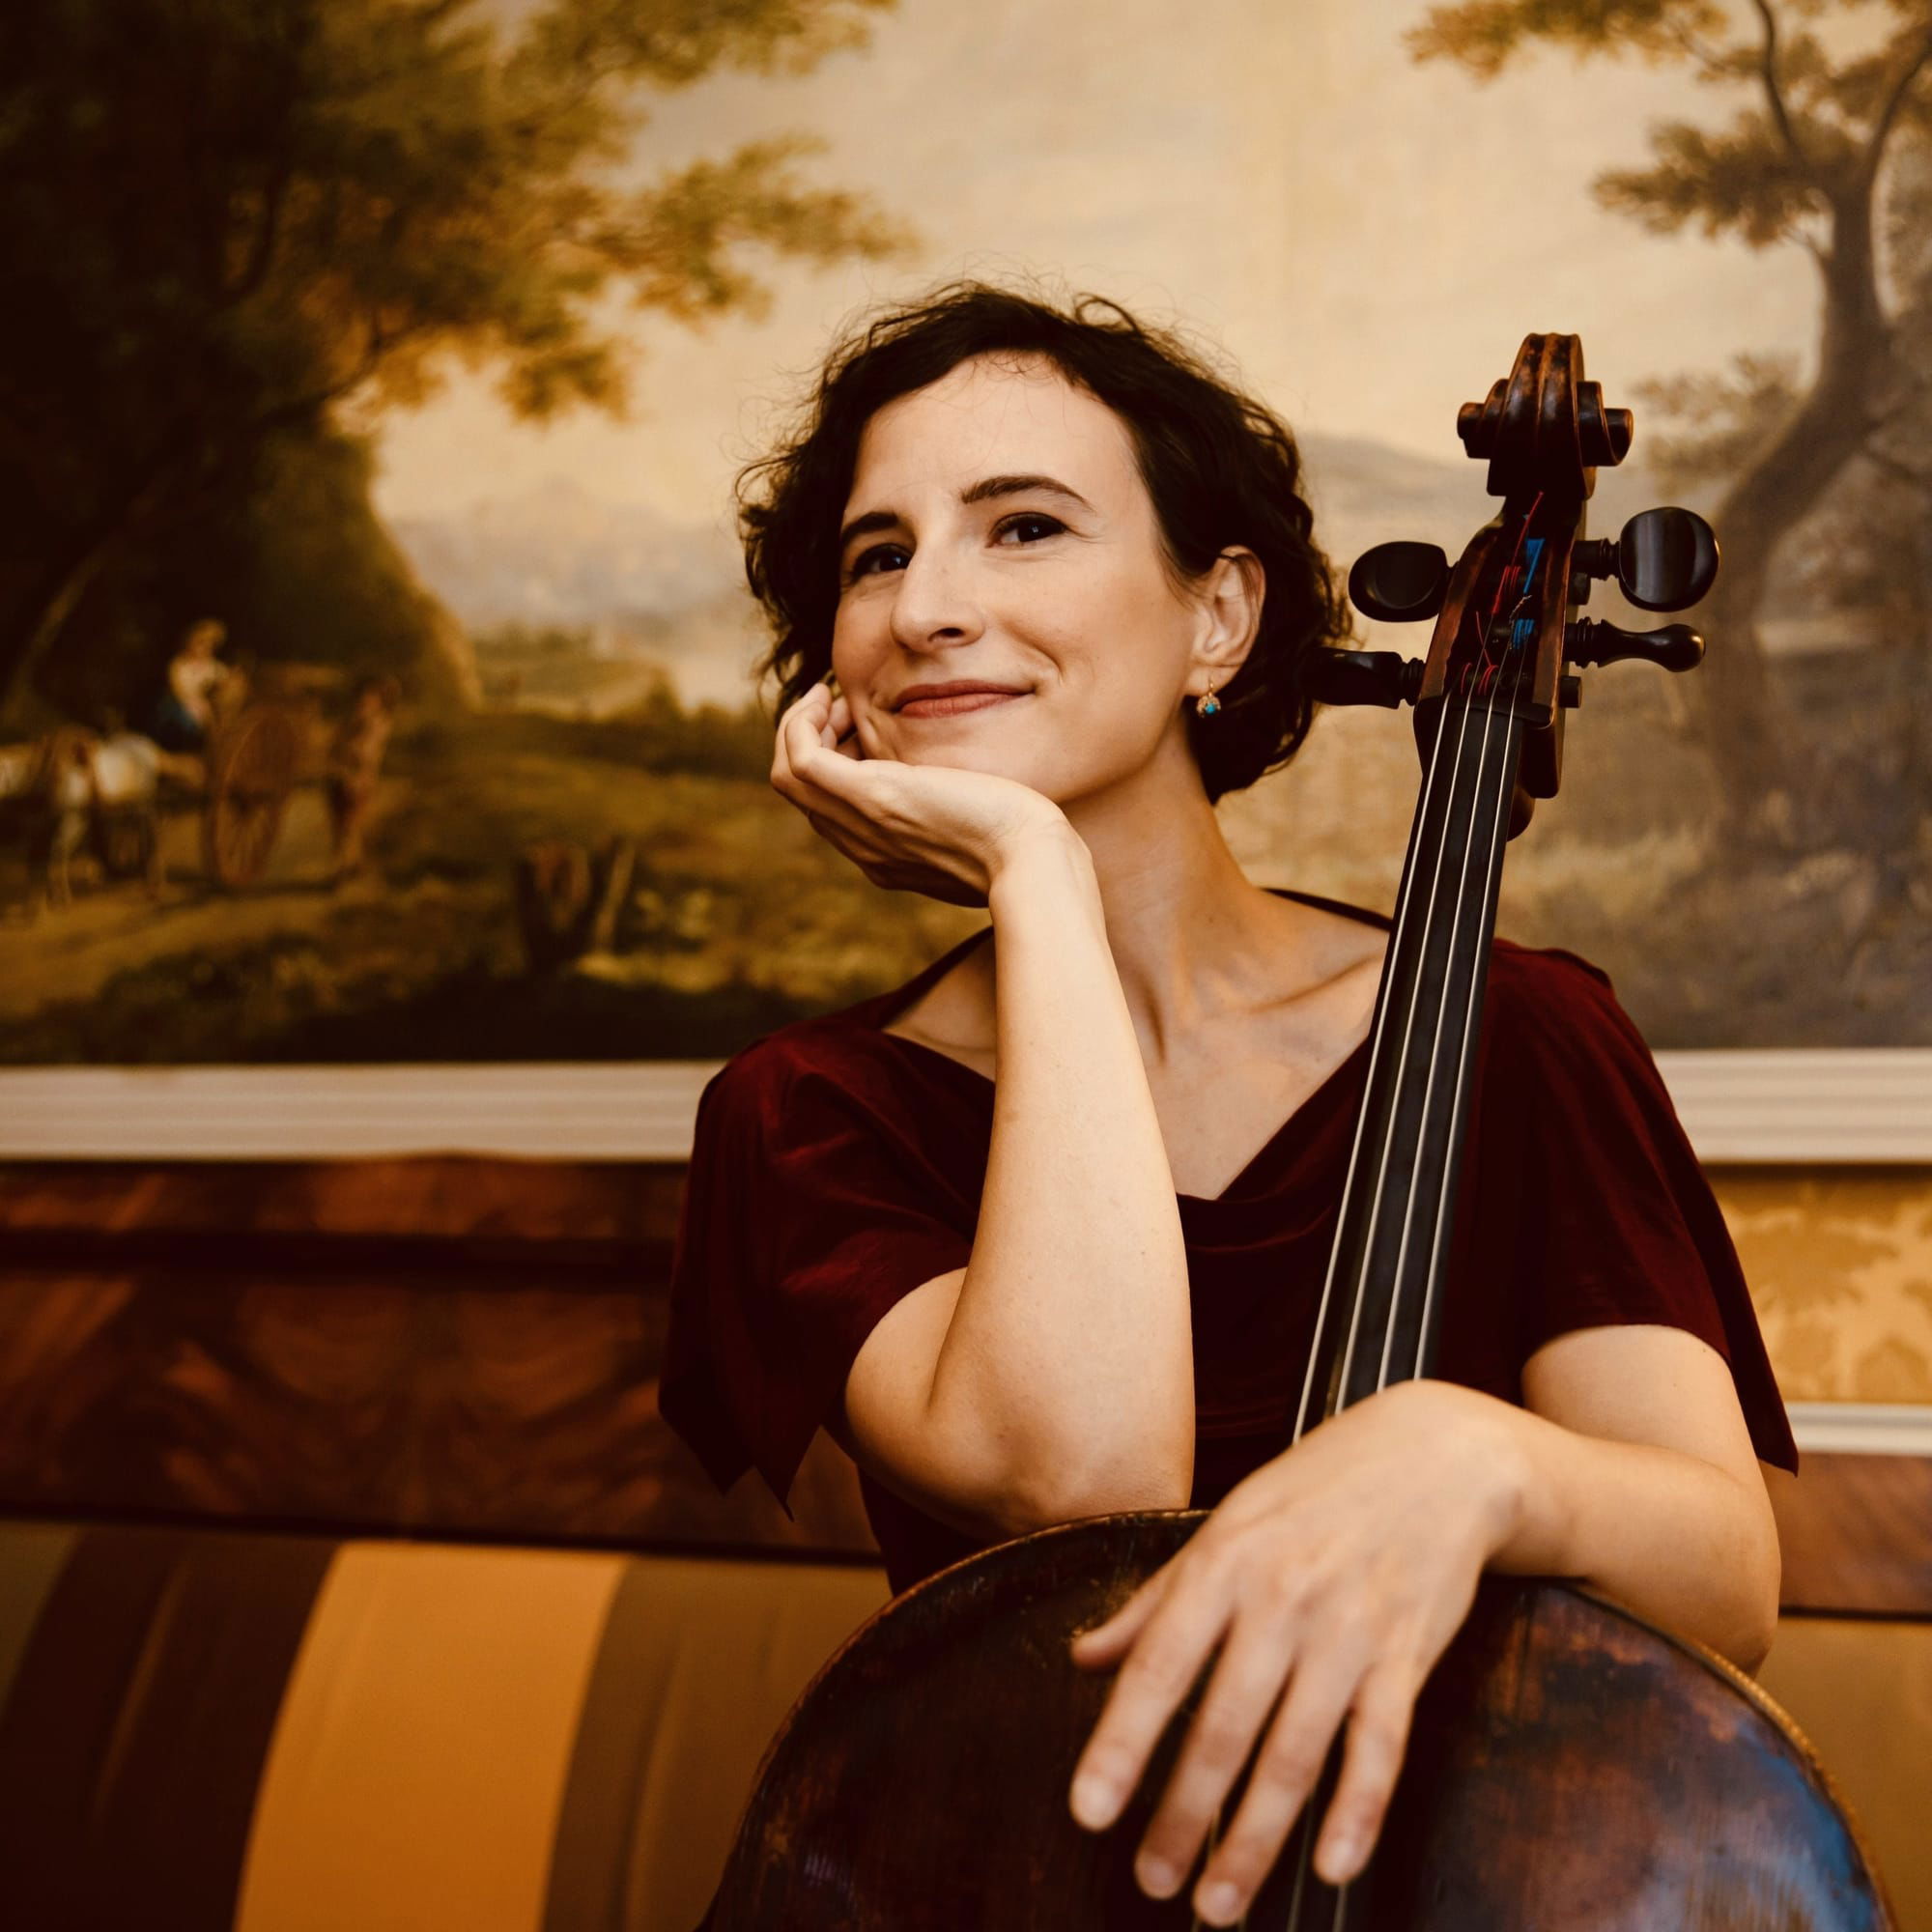 ProART Entrevista: Isabel Vaz - uma vida entre as cordas do violoncelo